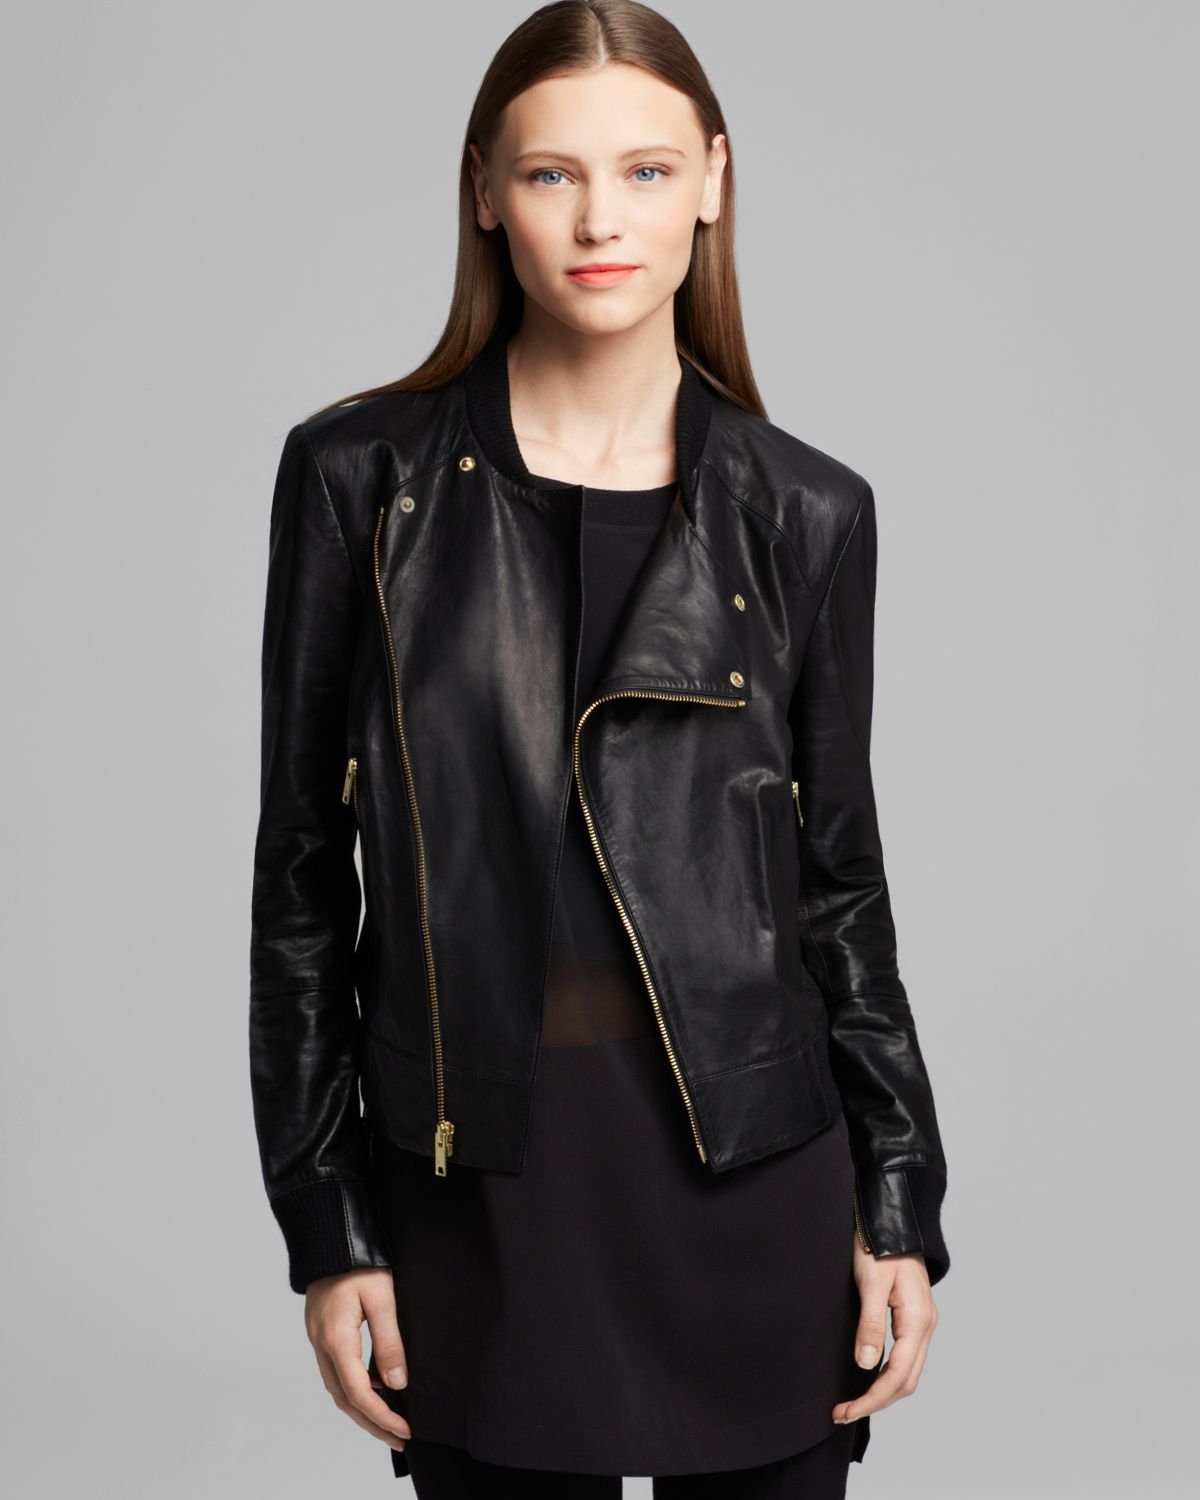 Lyst - Dkny Asymmetrical Zip Front Leather Jacket in Black